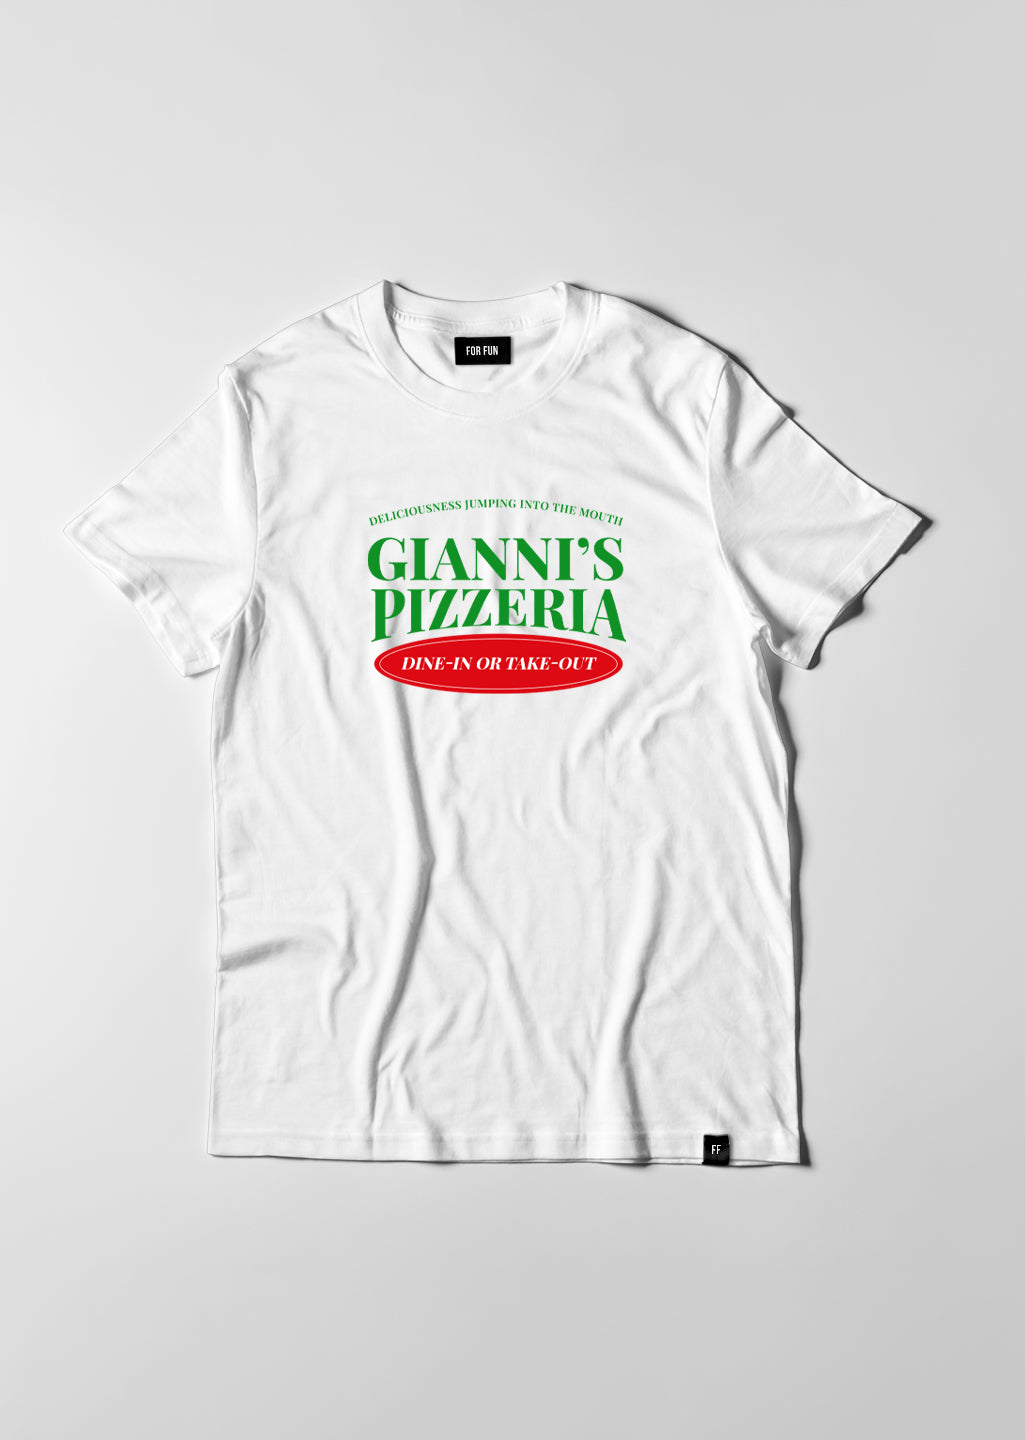 Giannis Pizzeria / T-shirt